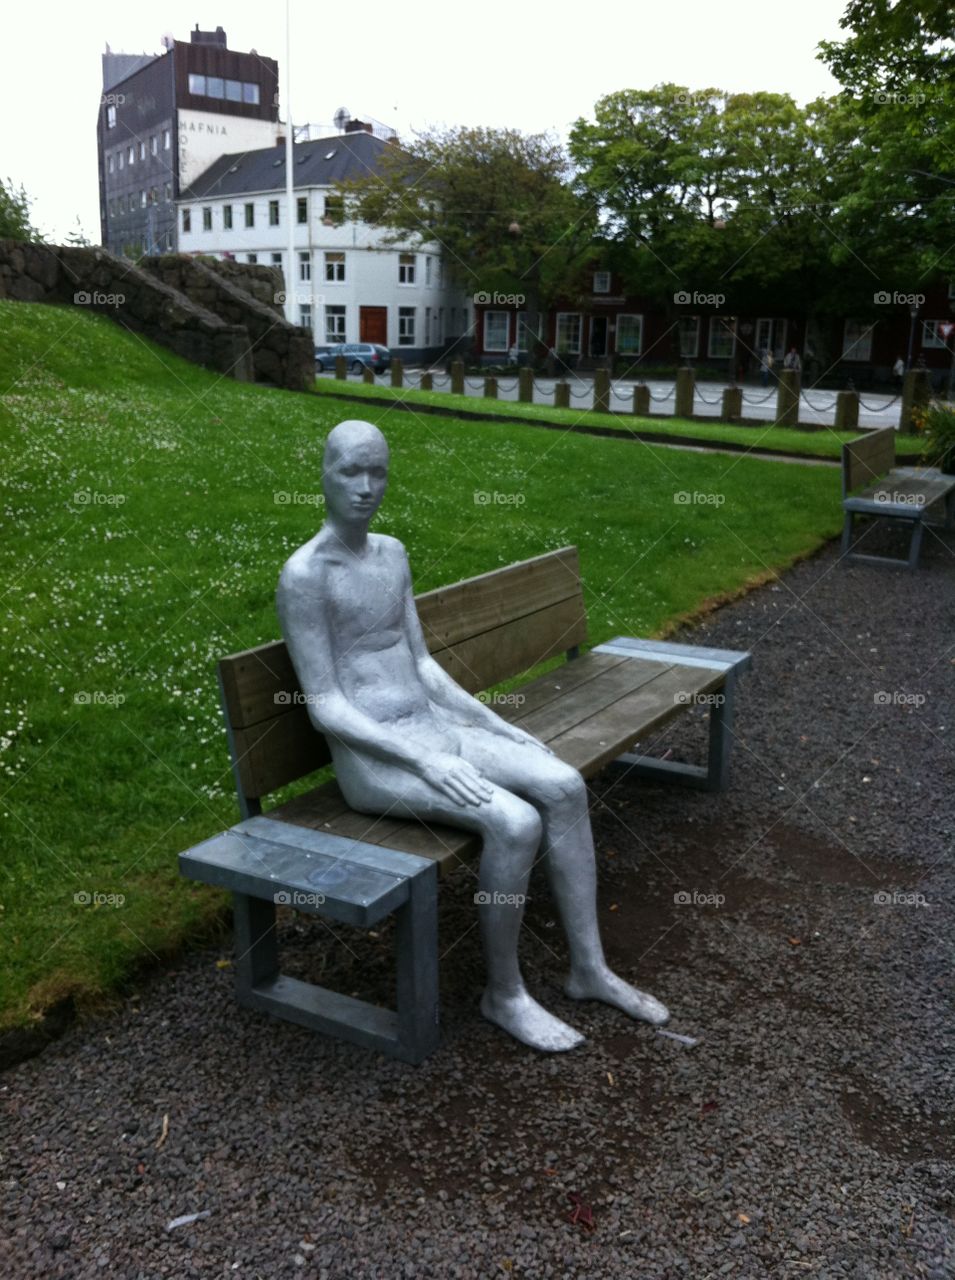 Tórshavn, Faroe Islands - outdoor sculpture